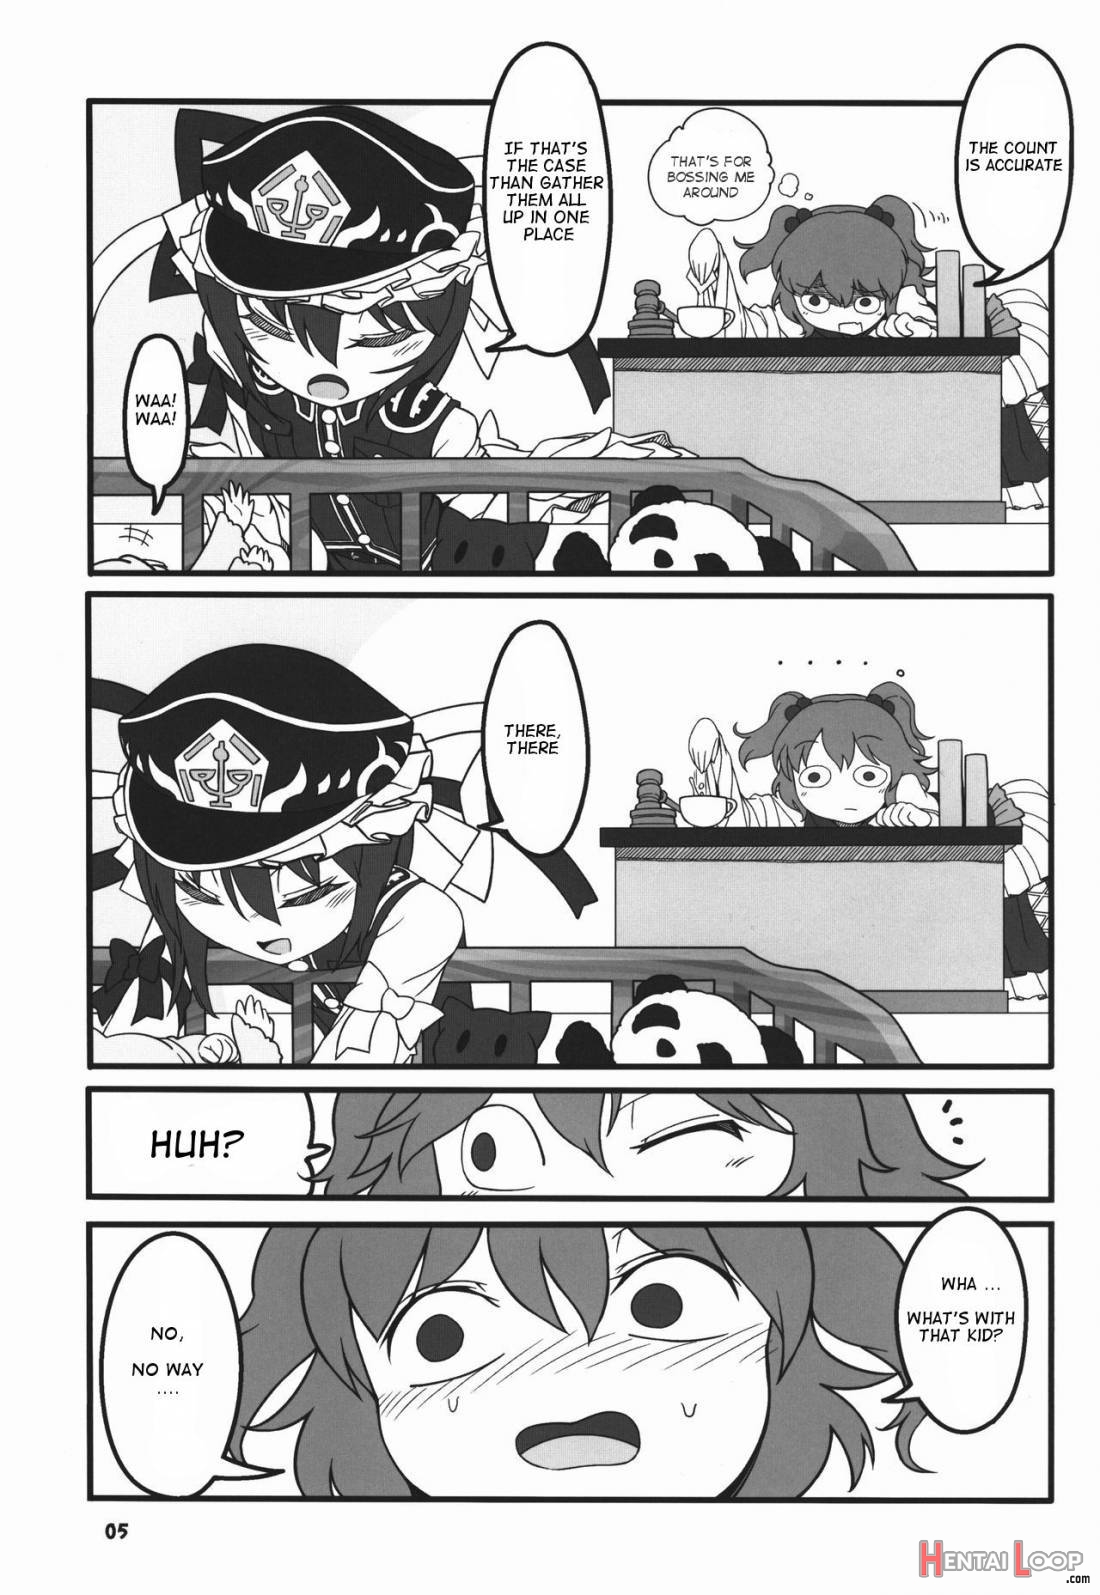 Shift Change Eiki-sama page 4